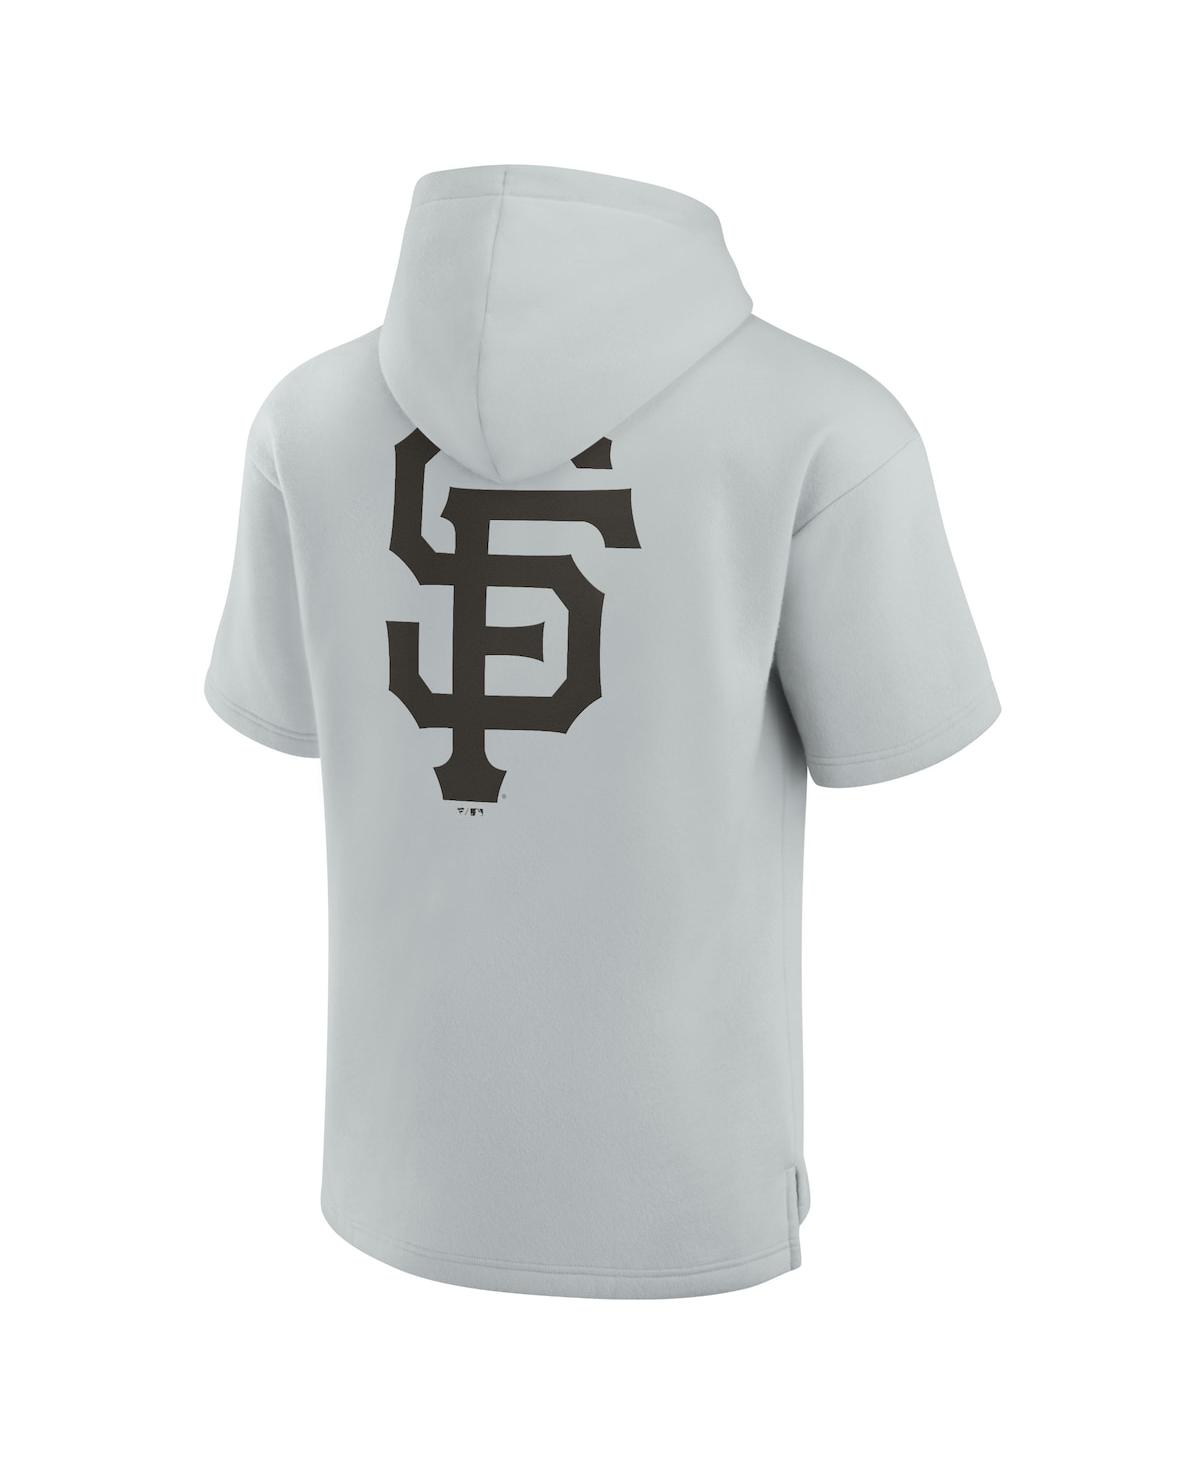 Shop Fanatics Signature Men's And Women's  Gray San Francisco Giants Super Soft Fleece Short Sleeve Hoodie